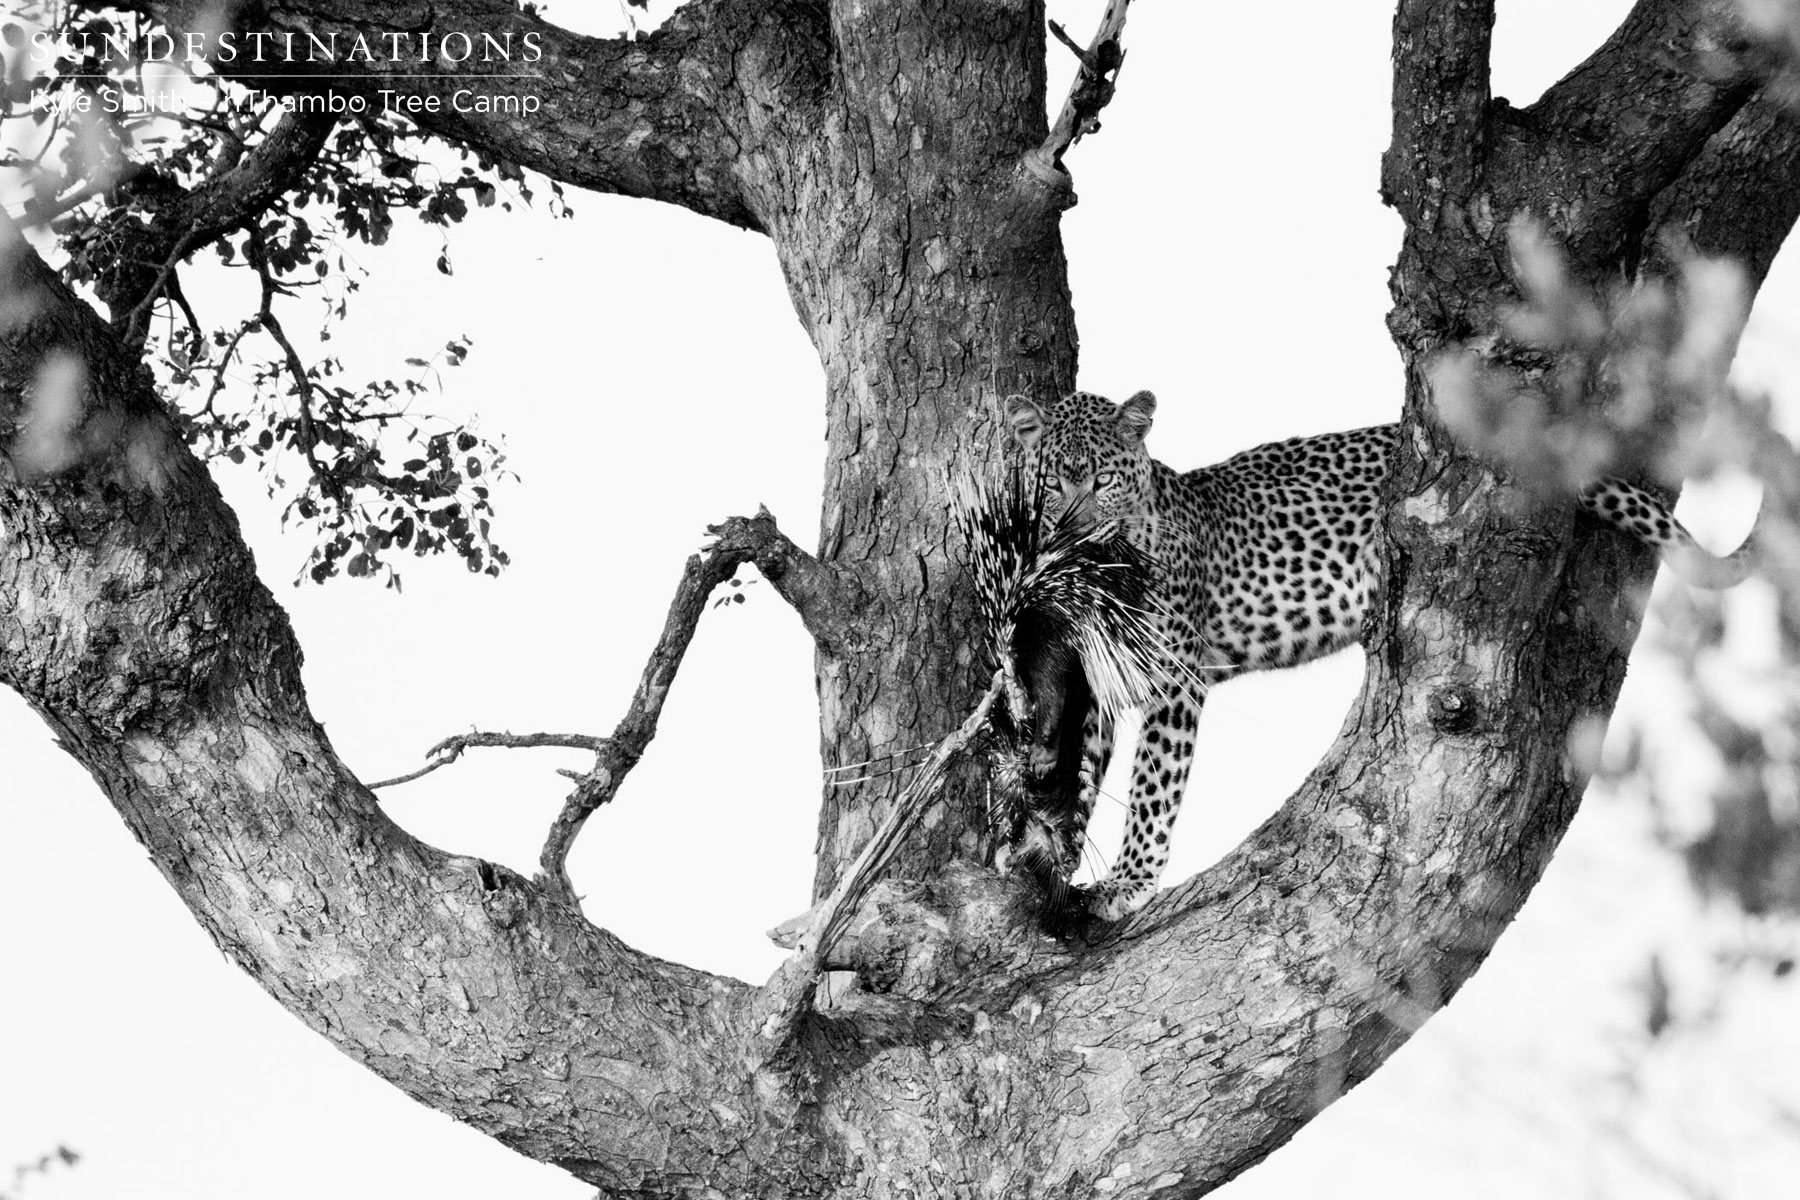 Leopard at nThambo Tree Camp